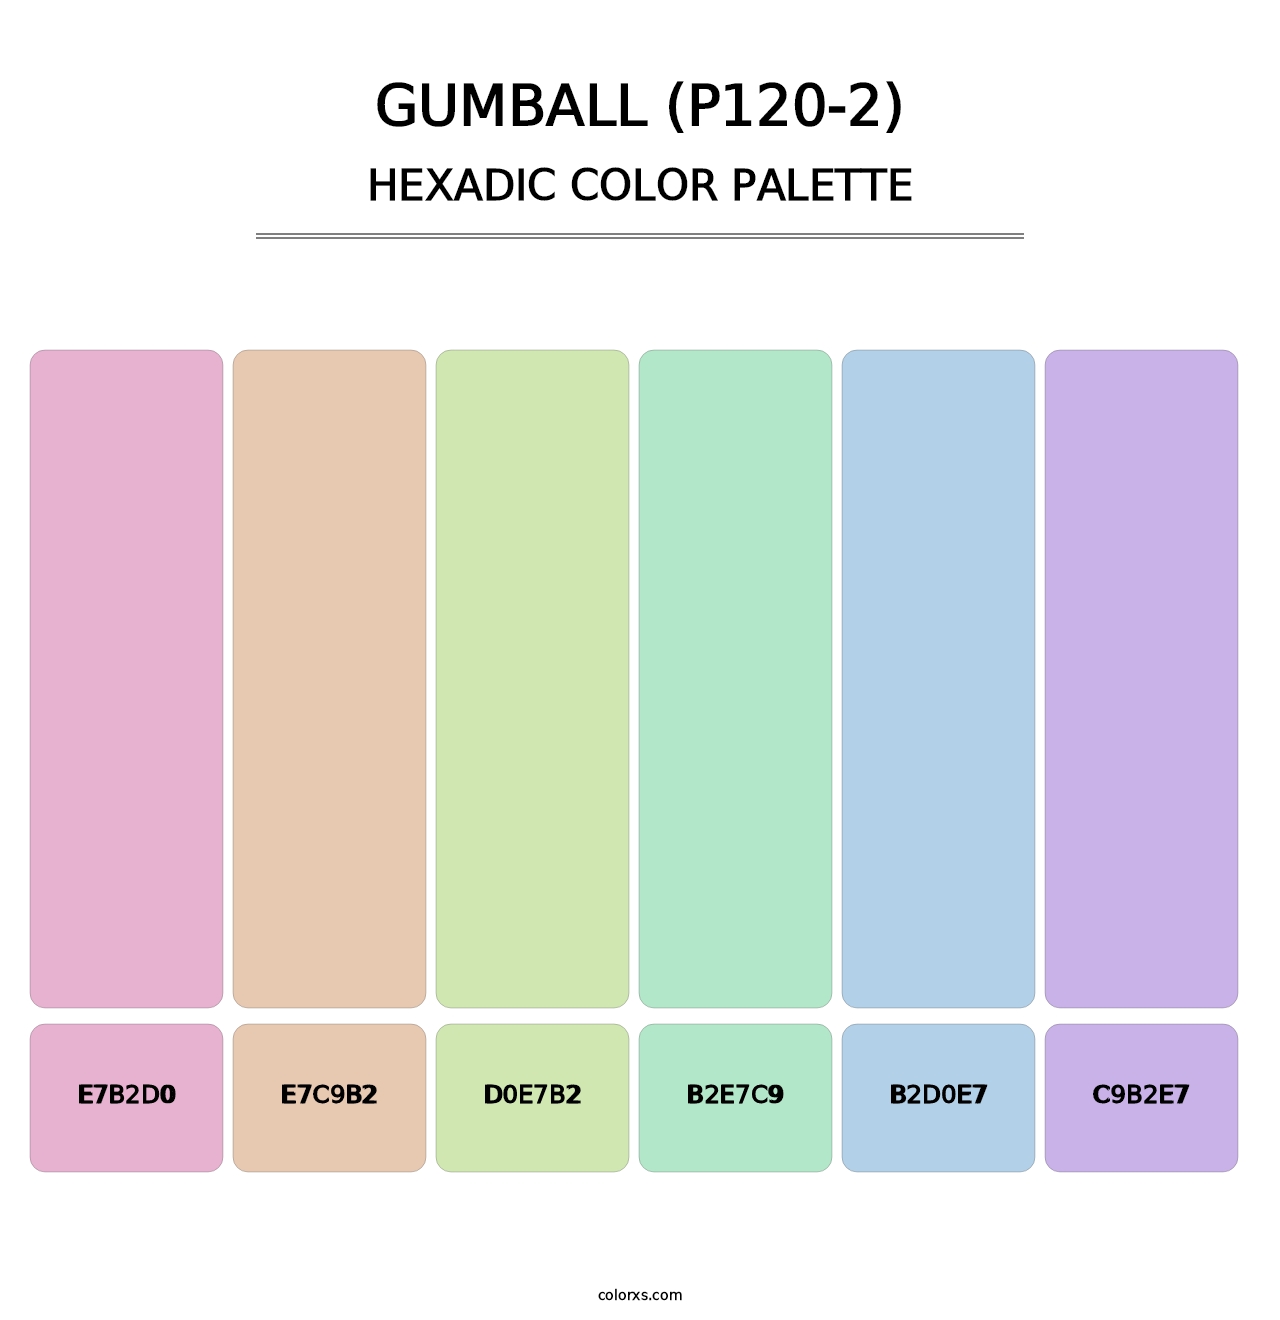 Gumball (P120-2) - Hexadic Color Palette